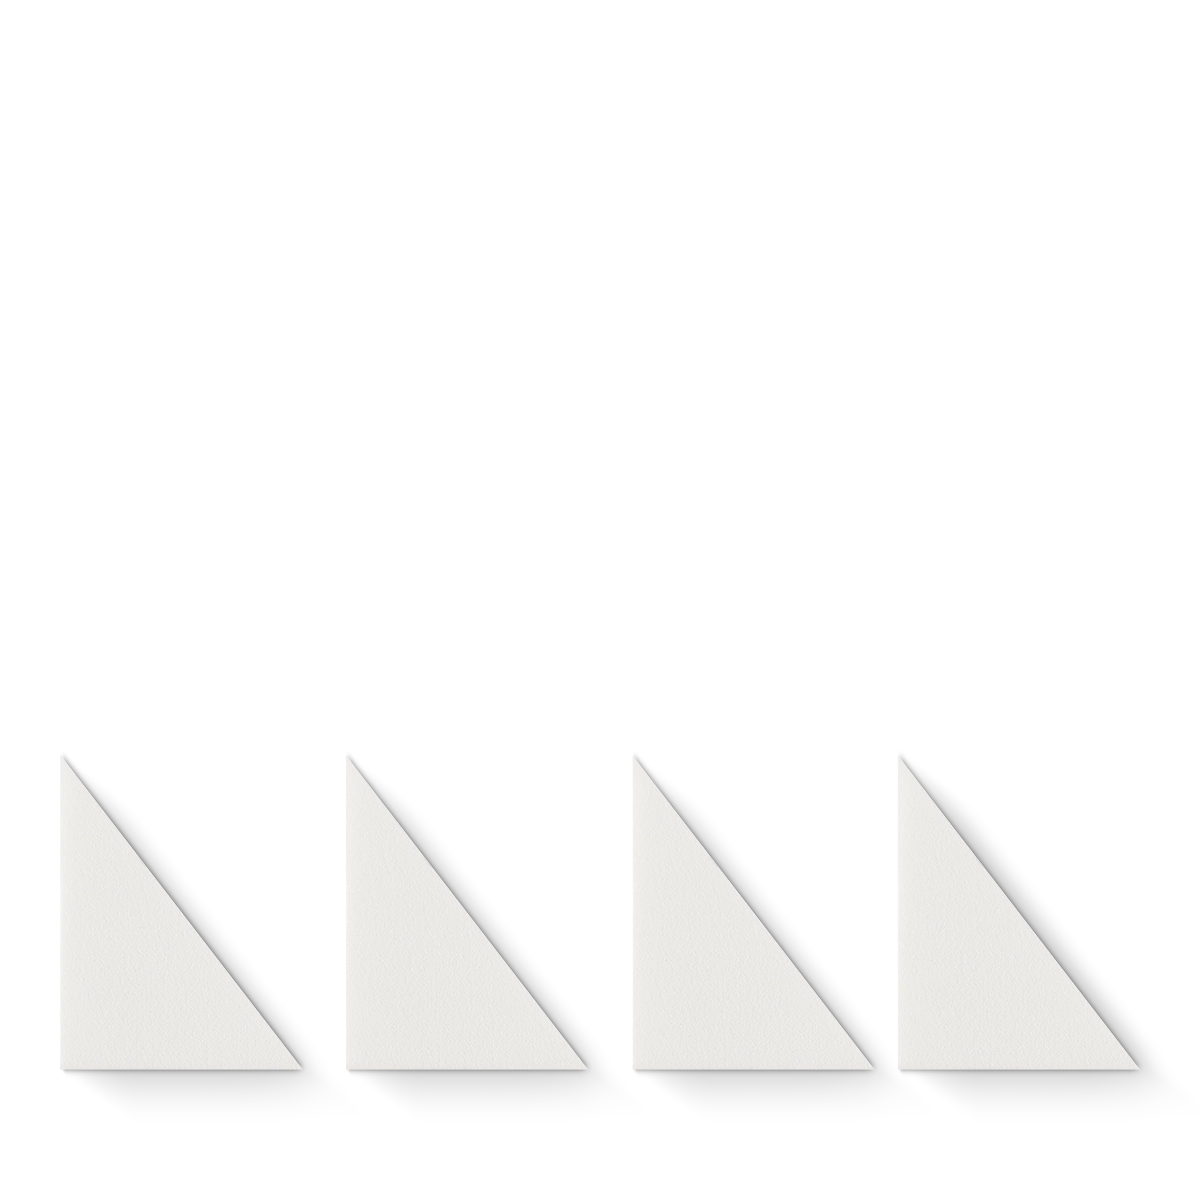 Triangular Foundation Sponges